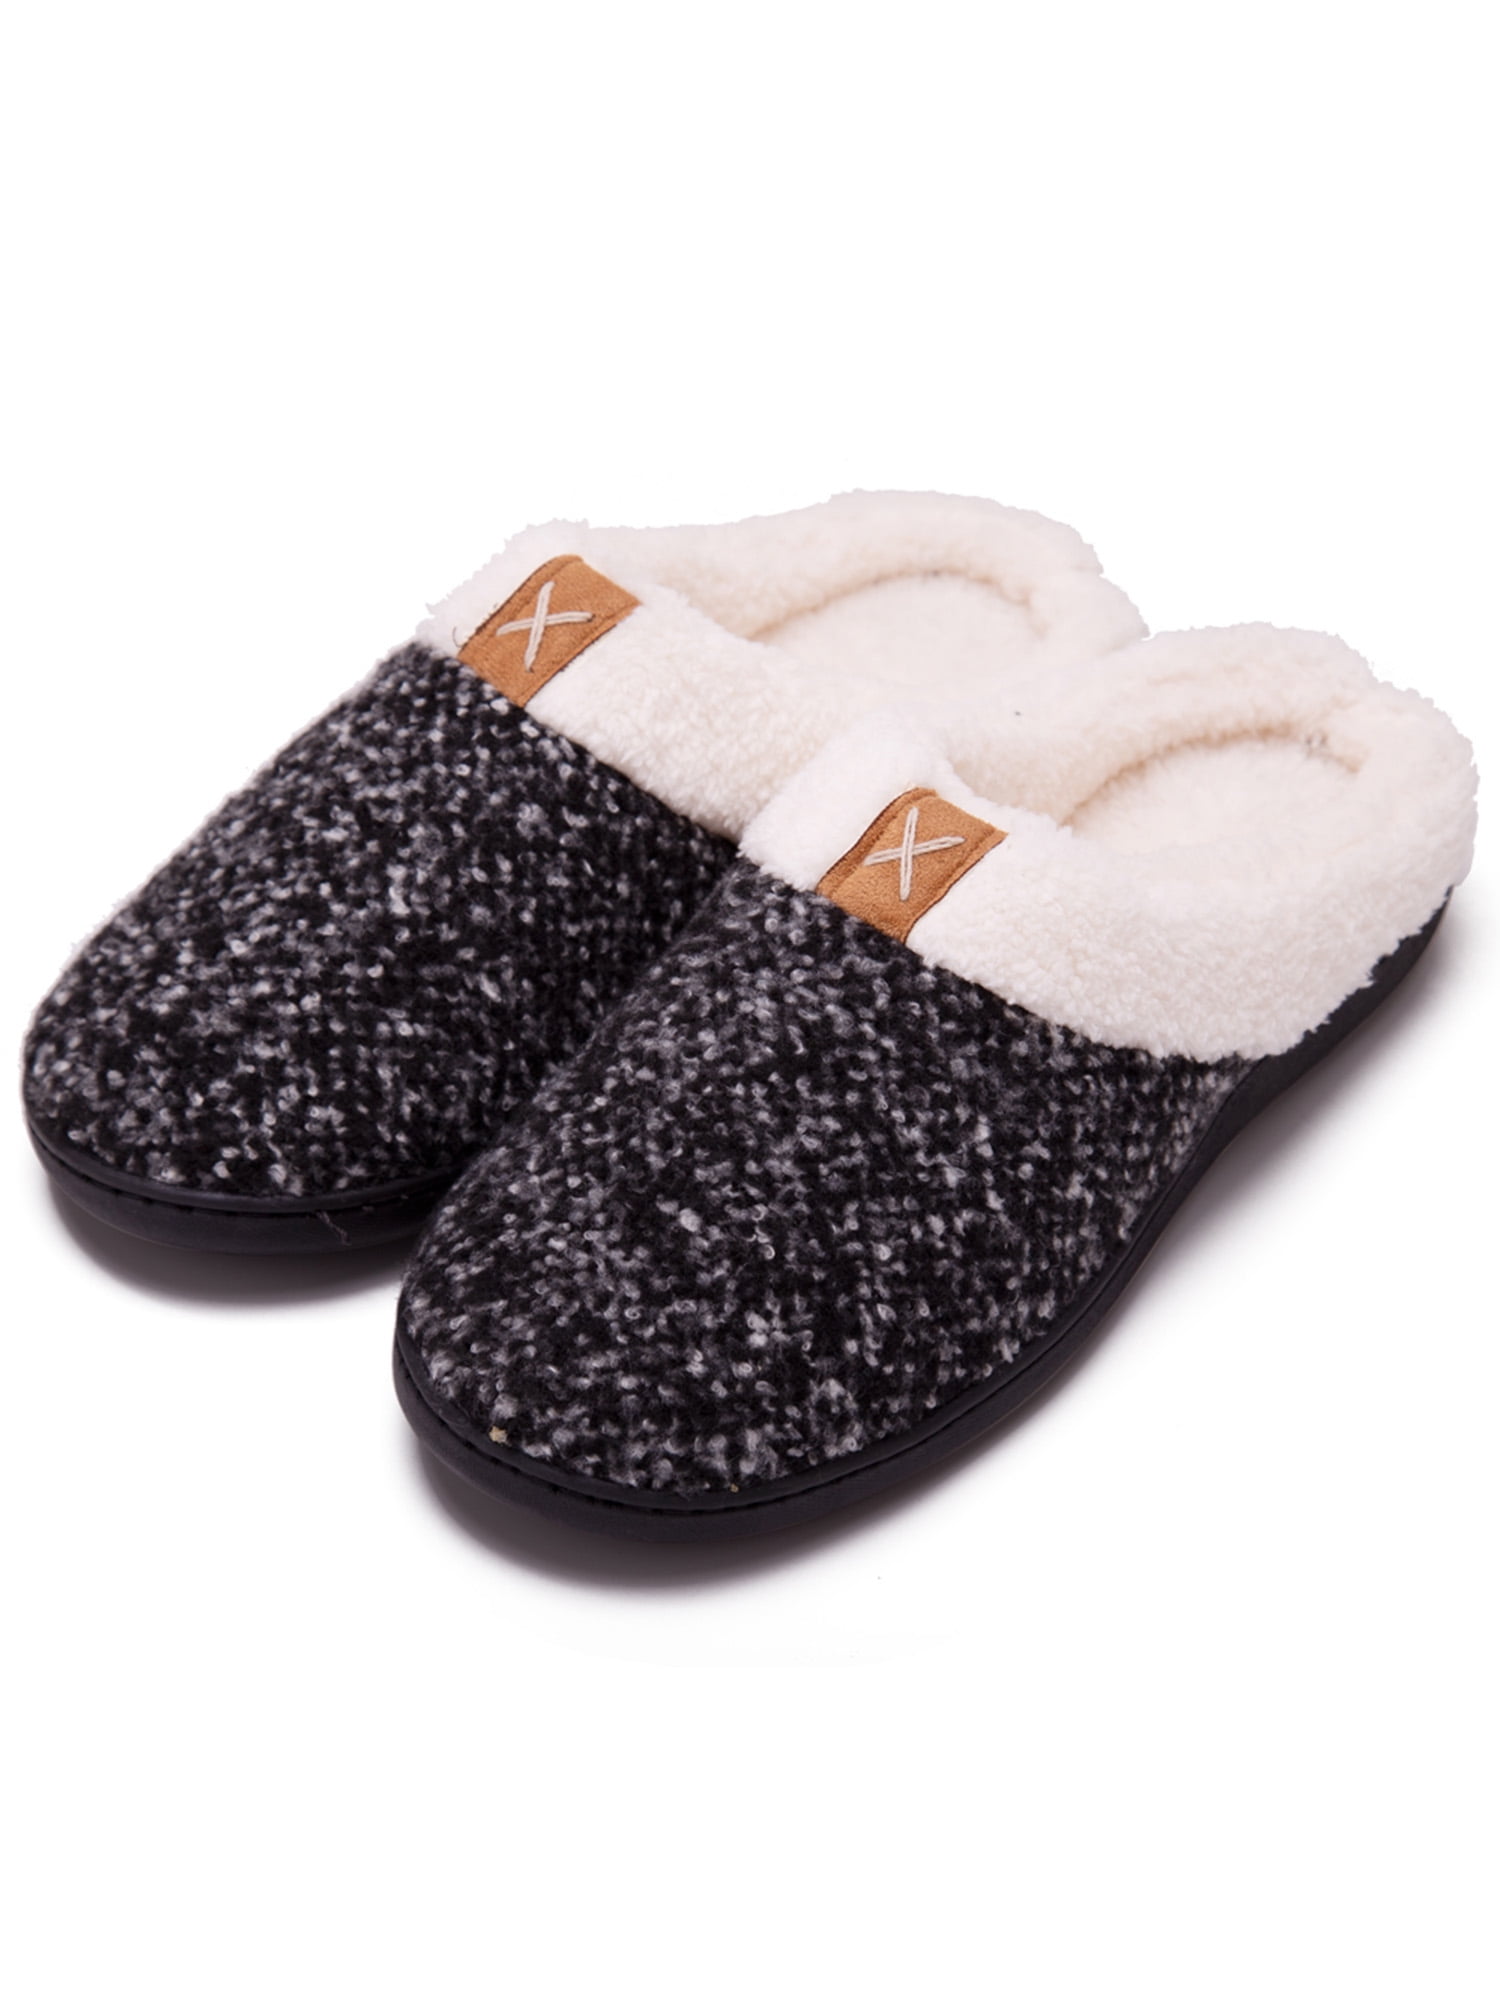 Men Womens Plush Slippers Slip On Soft Comfy Winter Warm Indoor Bedroom Shoes 